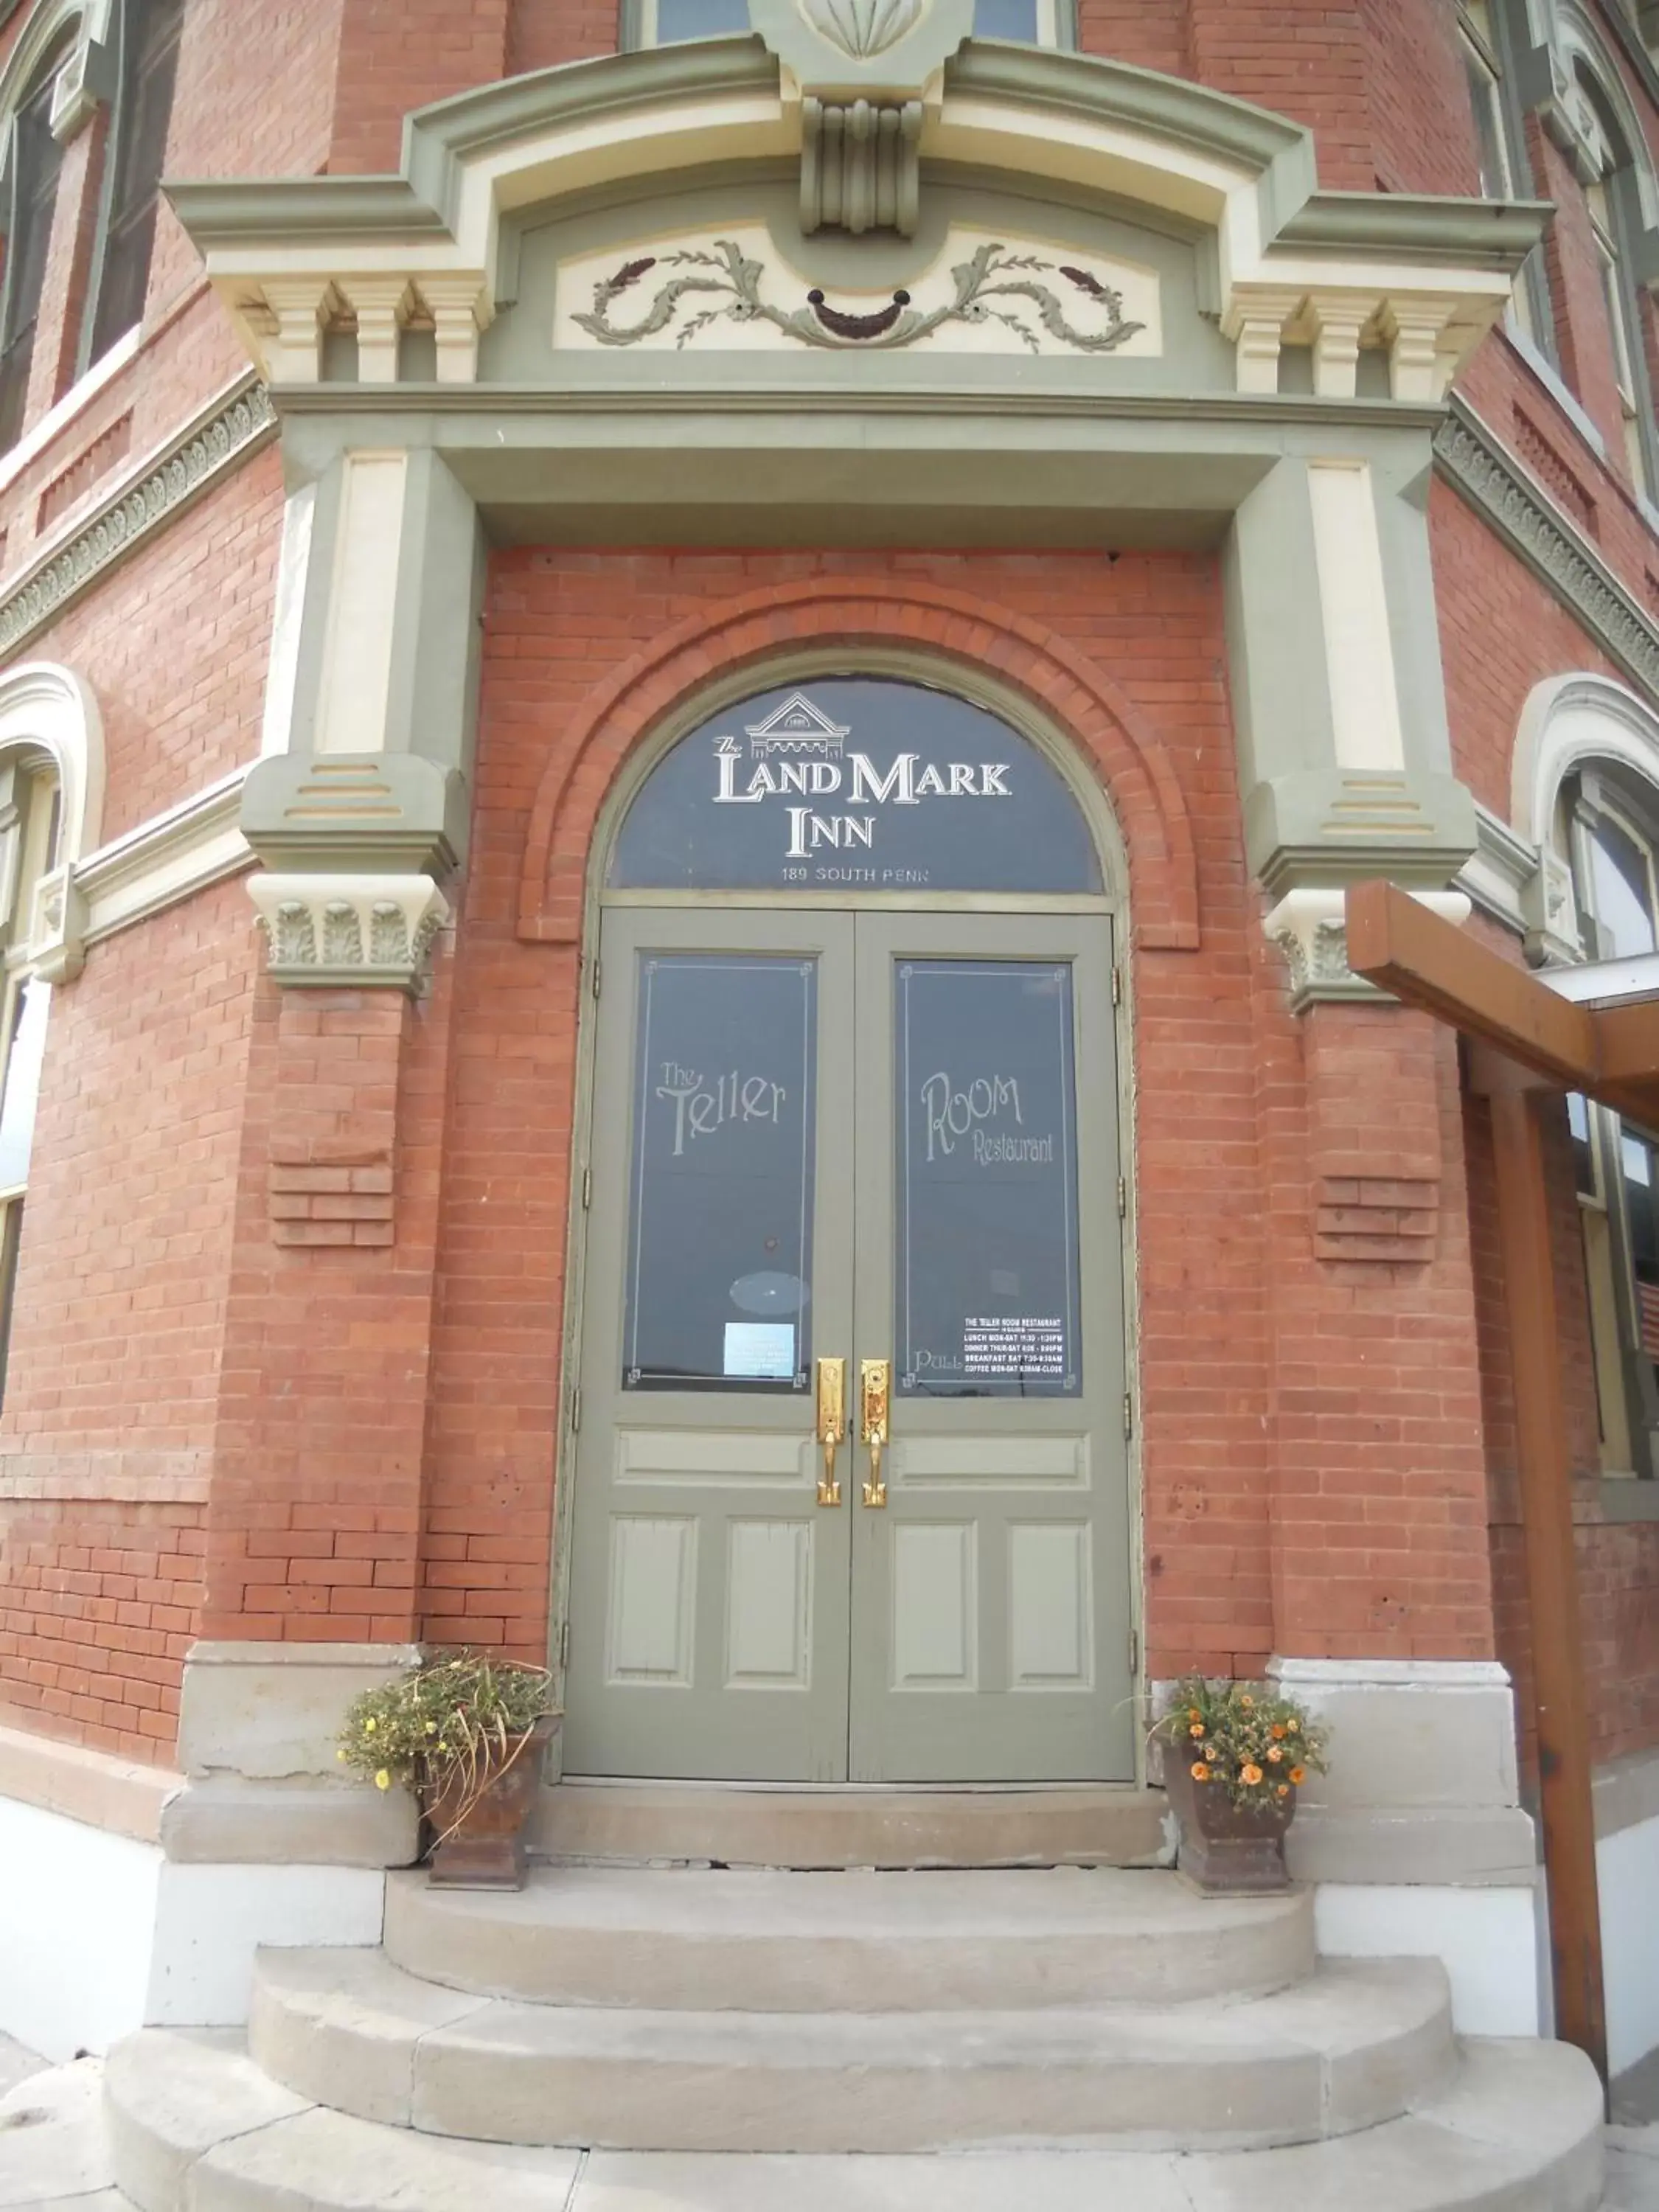 Facade/entrance in LandMark Inn at the Historic Bank of Oberlin